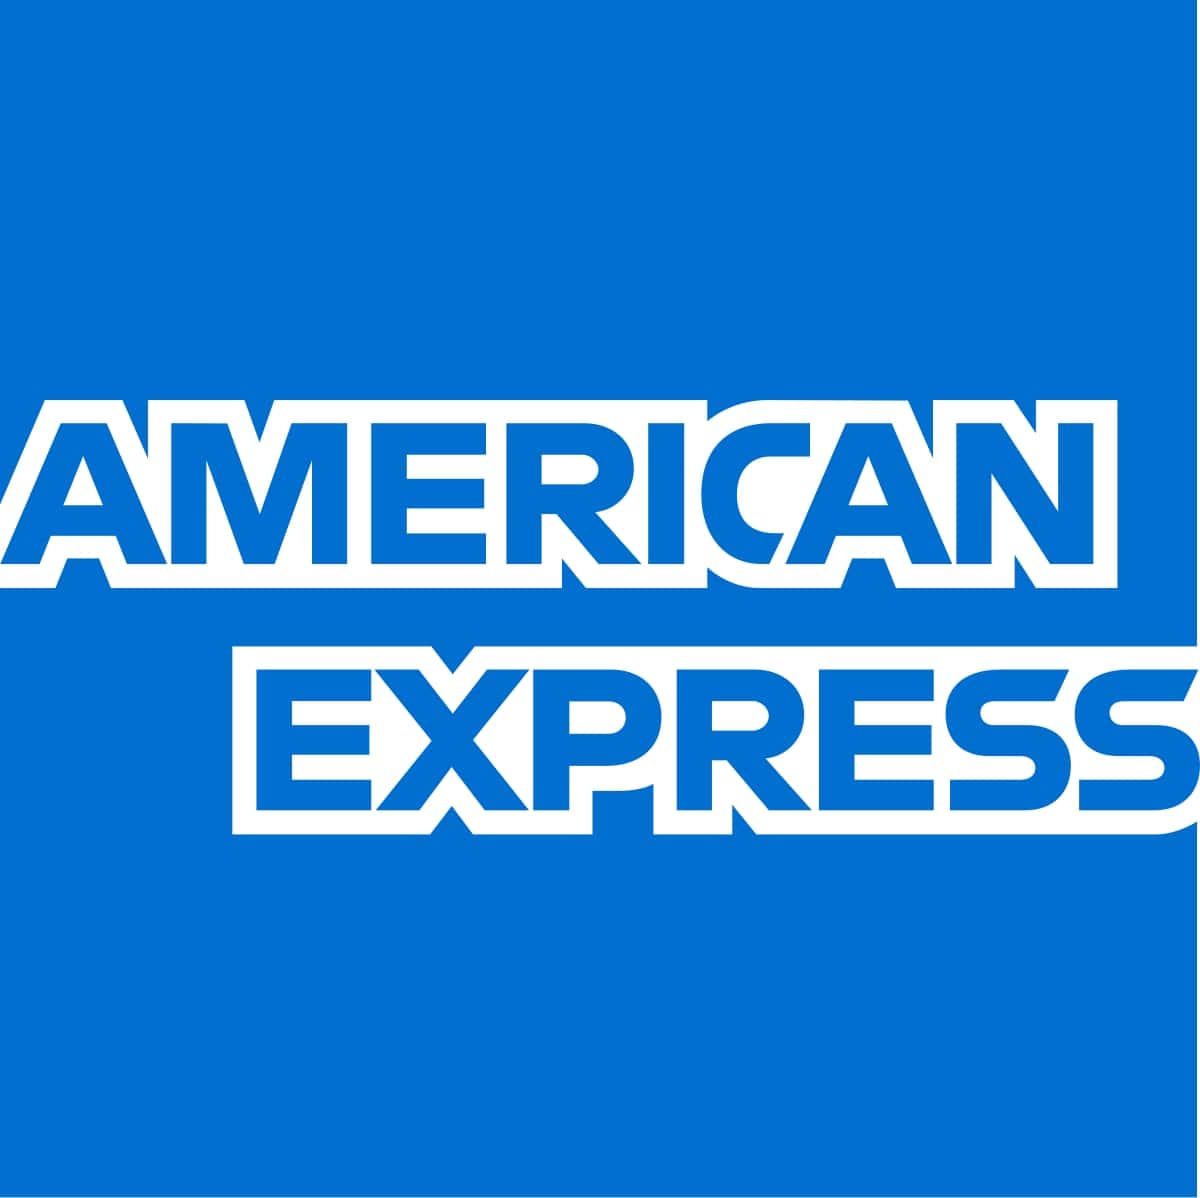 american express travel helpline